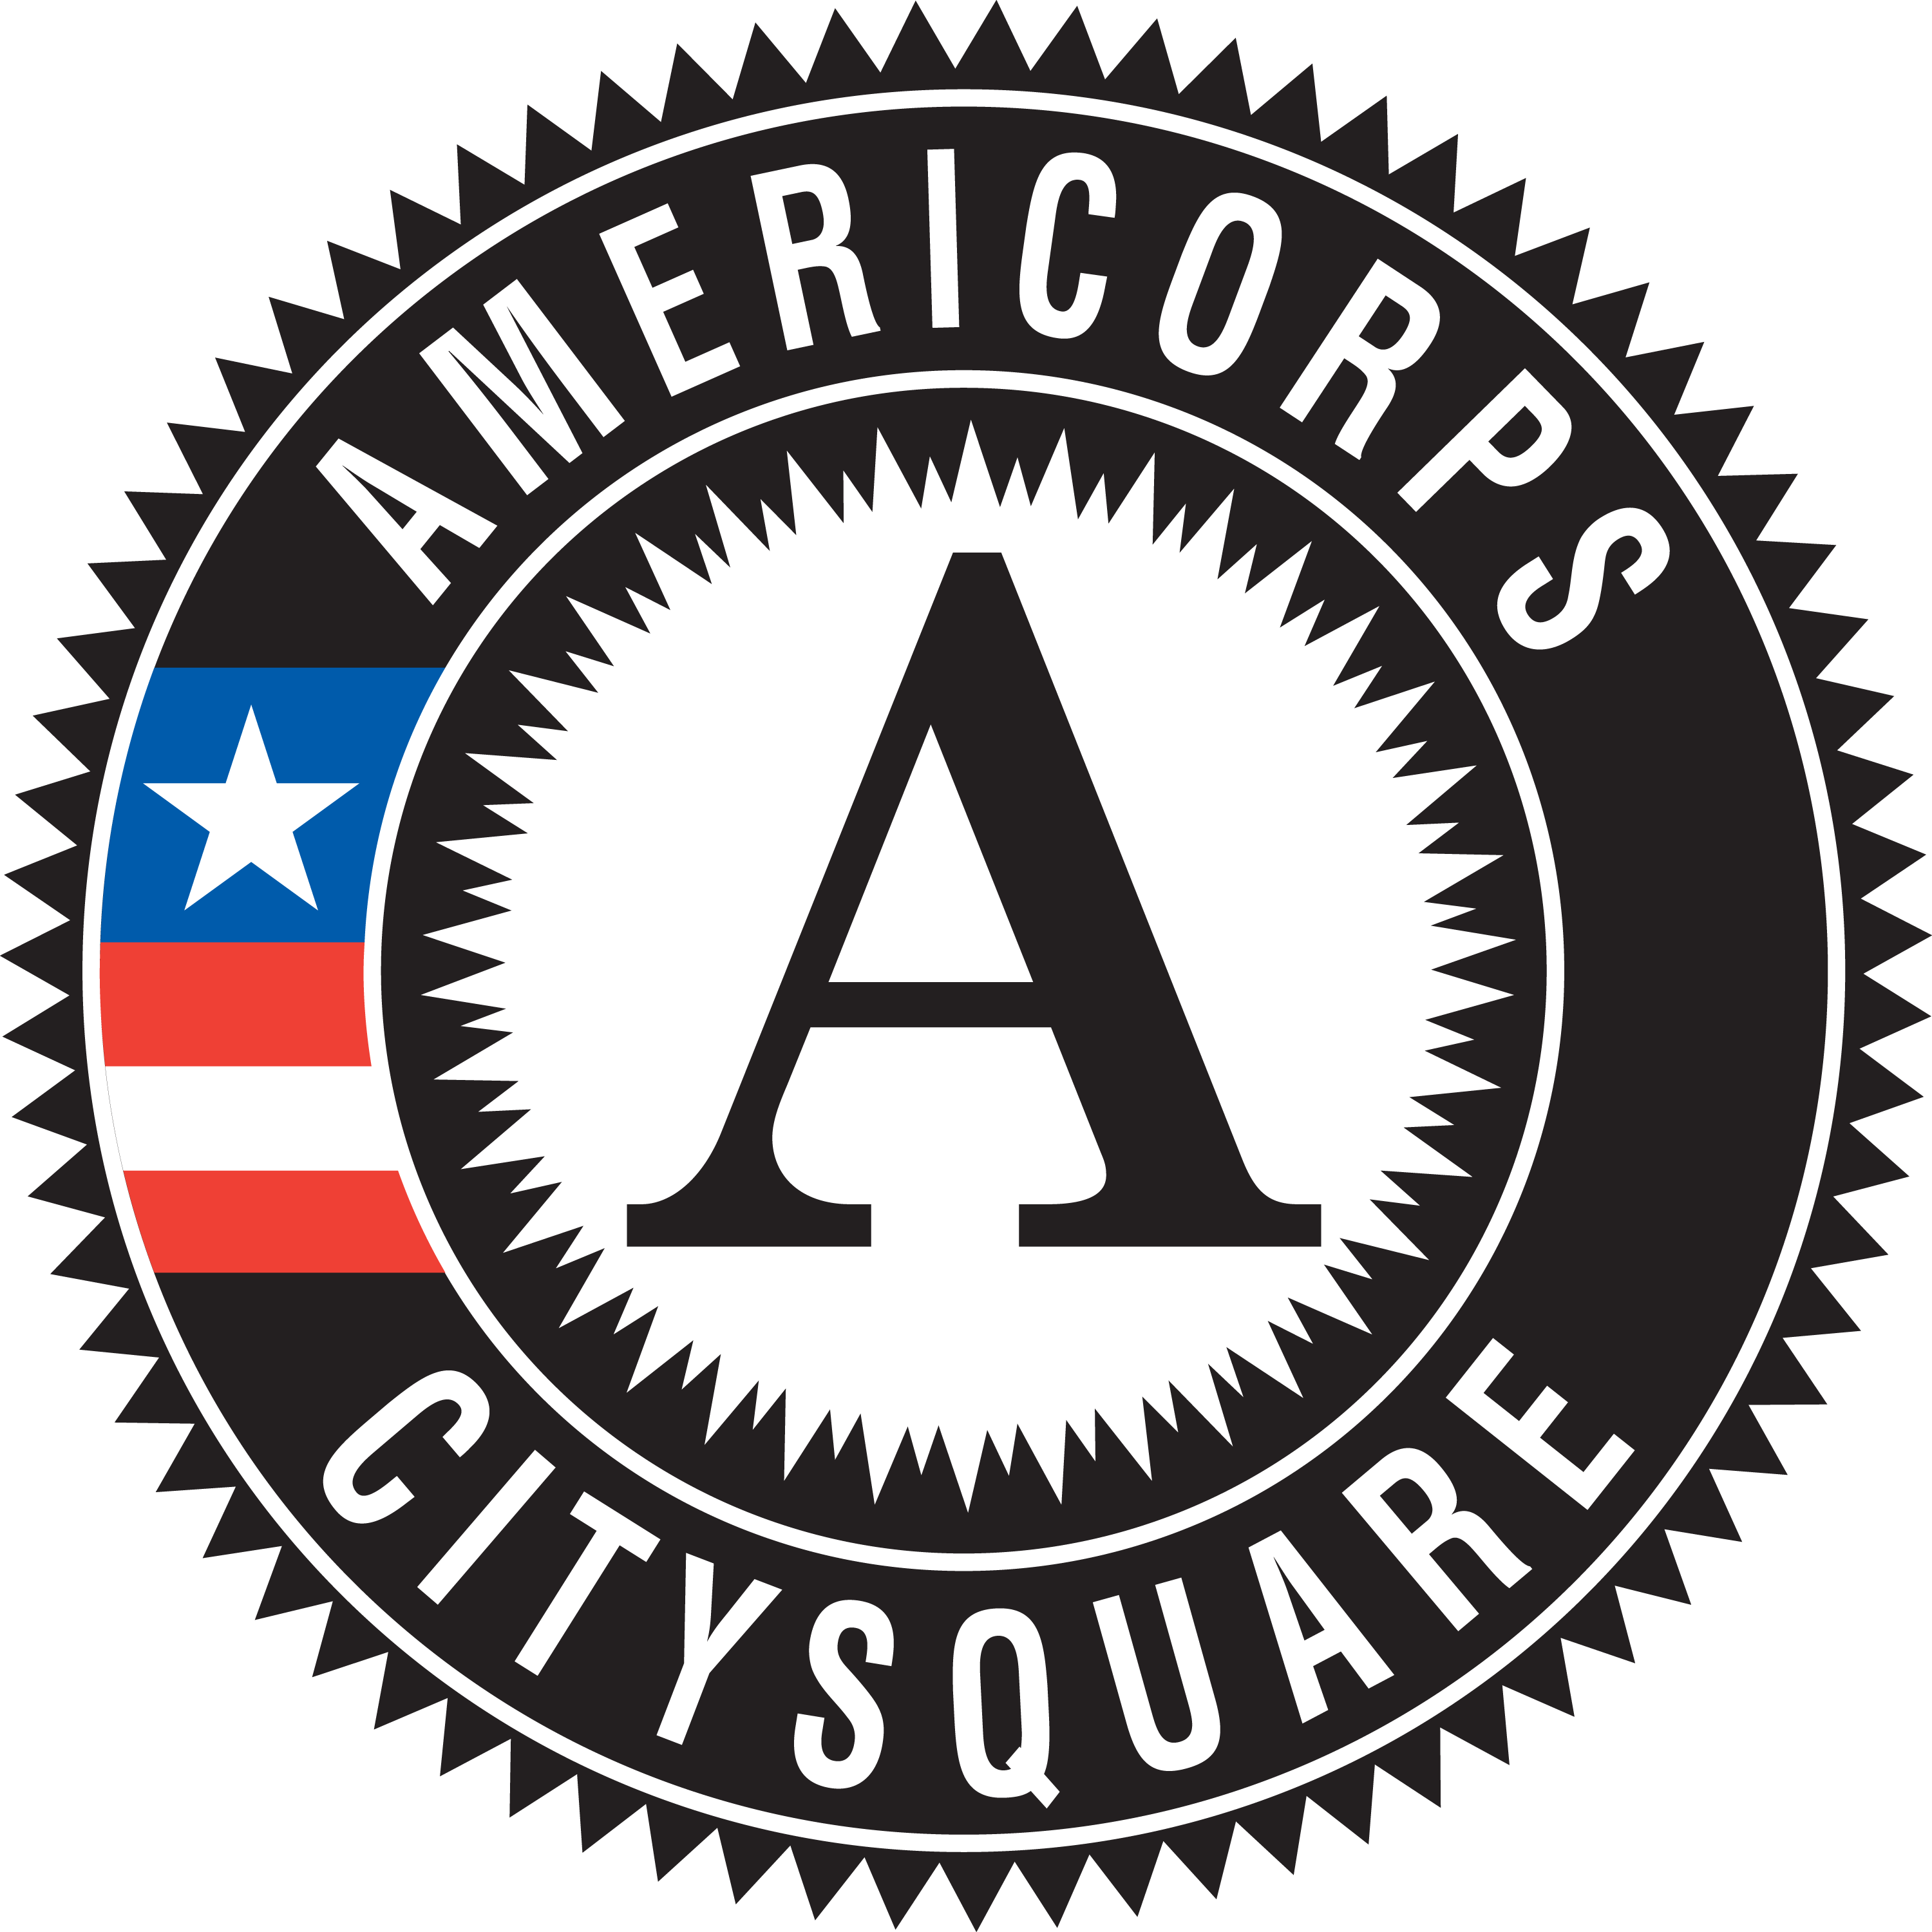 citysquare americorps logo